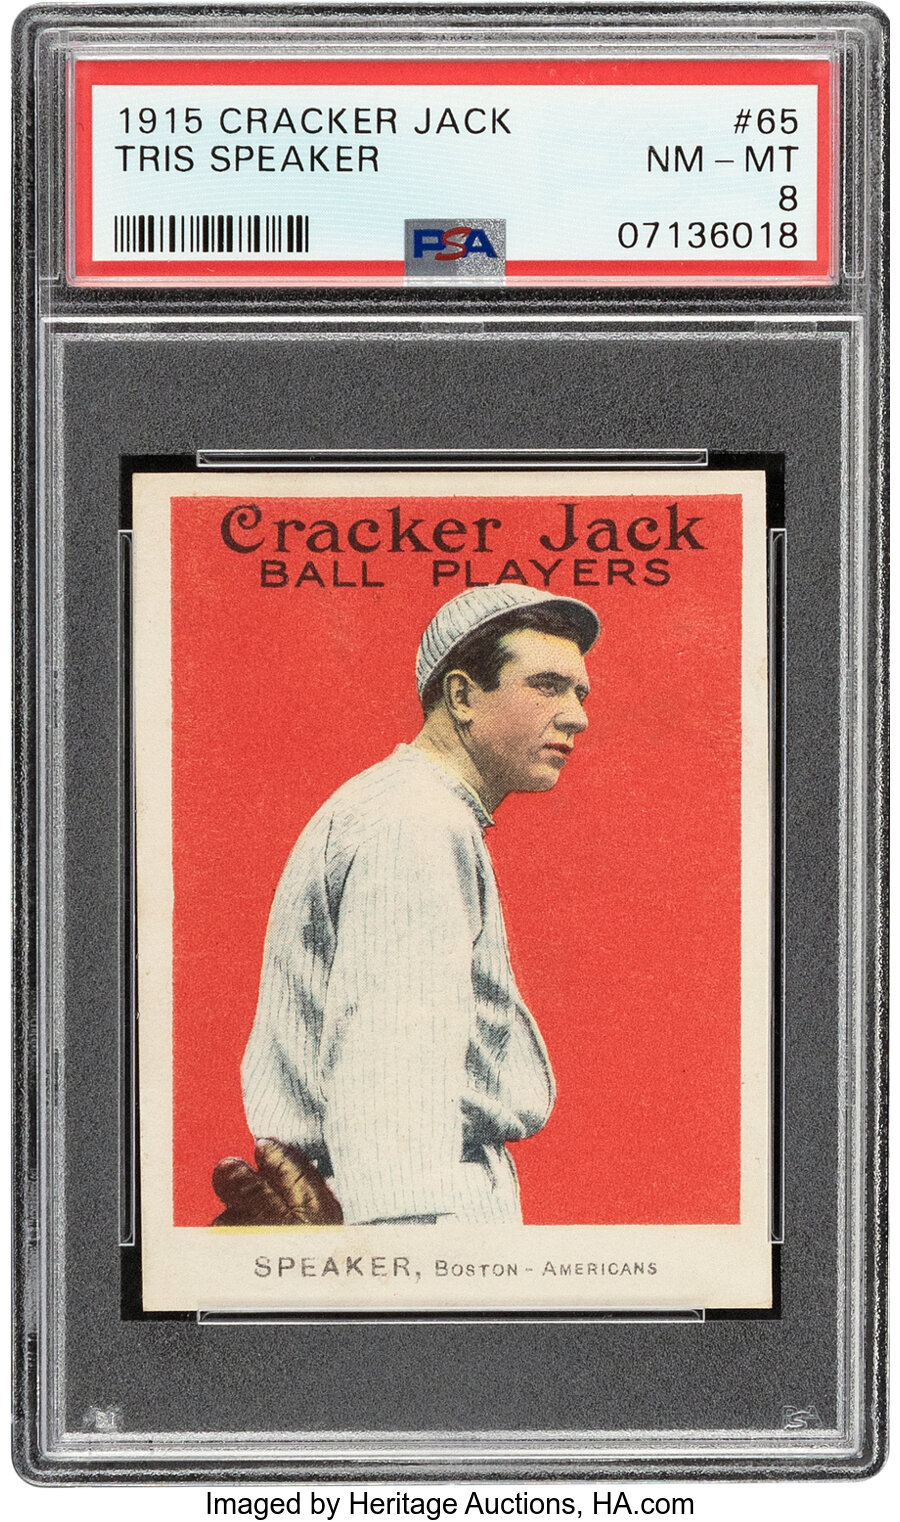 1915 Cracker Jack Tris Speaker #65 PSA NM-MT 8 - None Higher!